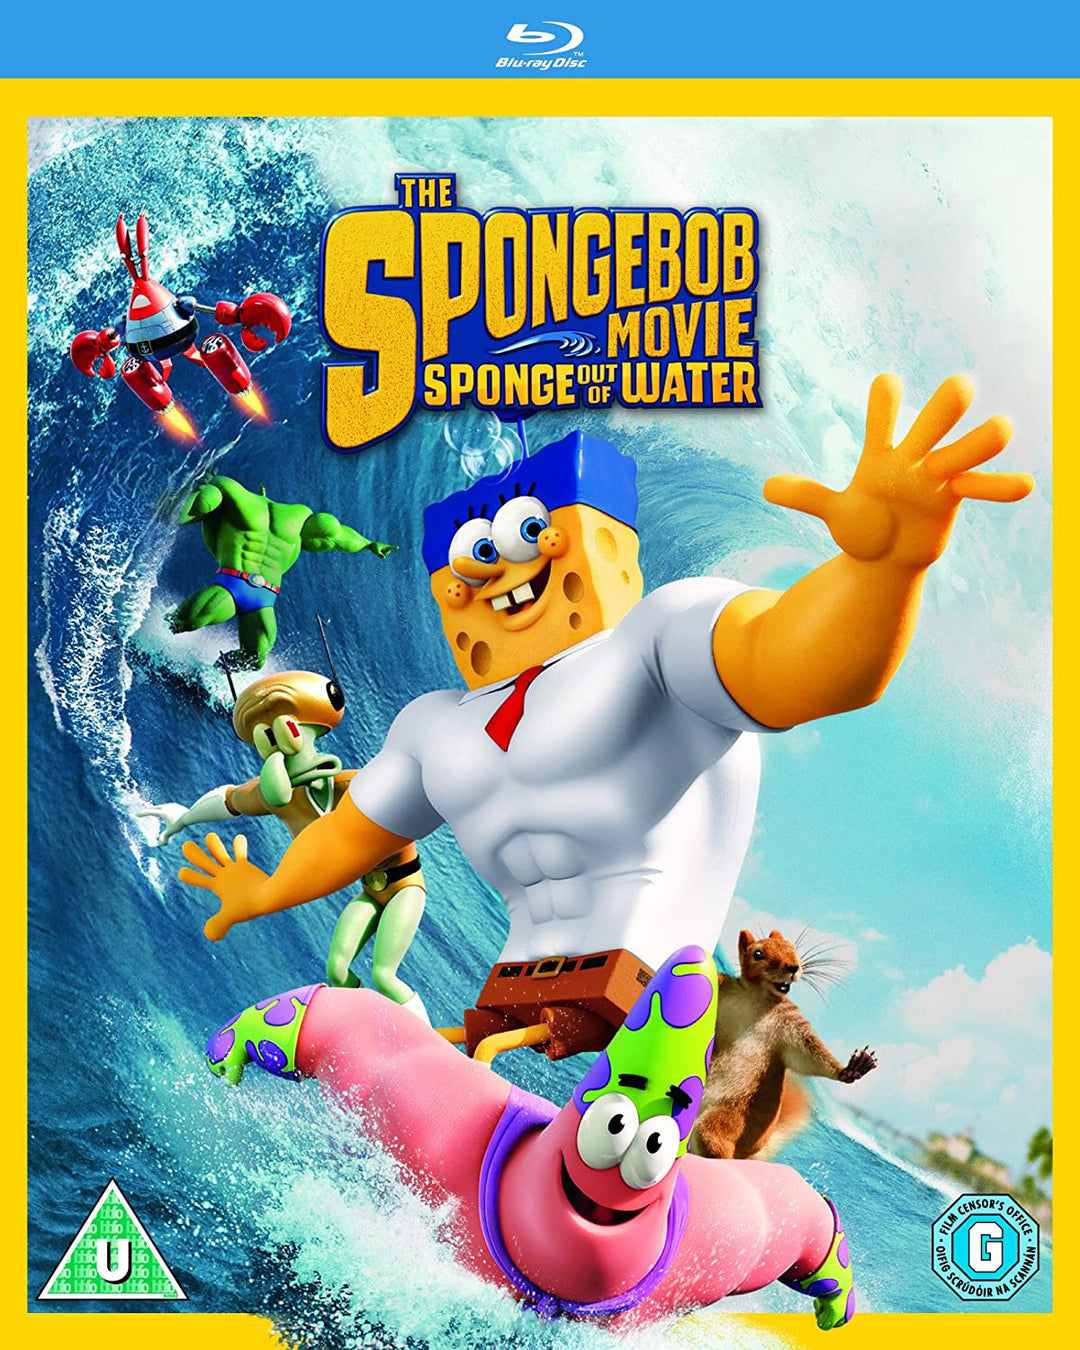 The Spongebob Movie: Sponge Out of Water [Region Free] - Family/Comedy [DVD]